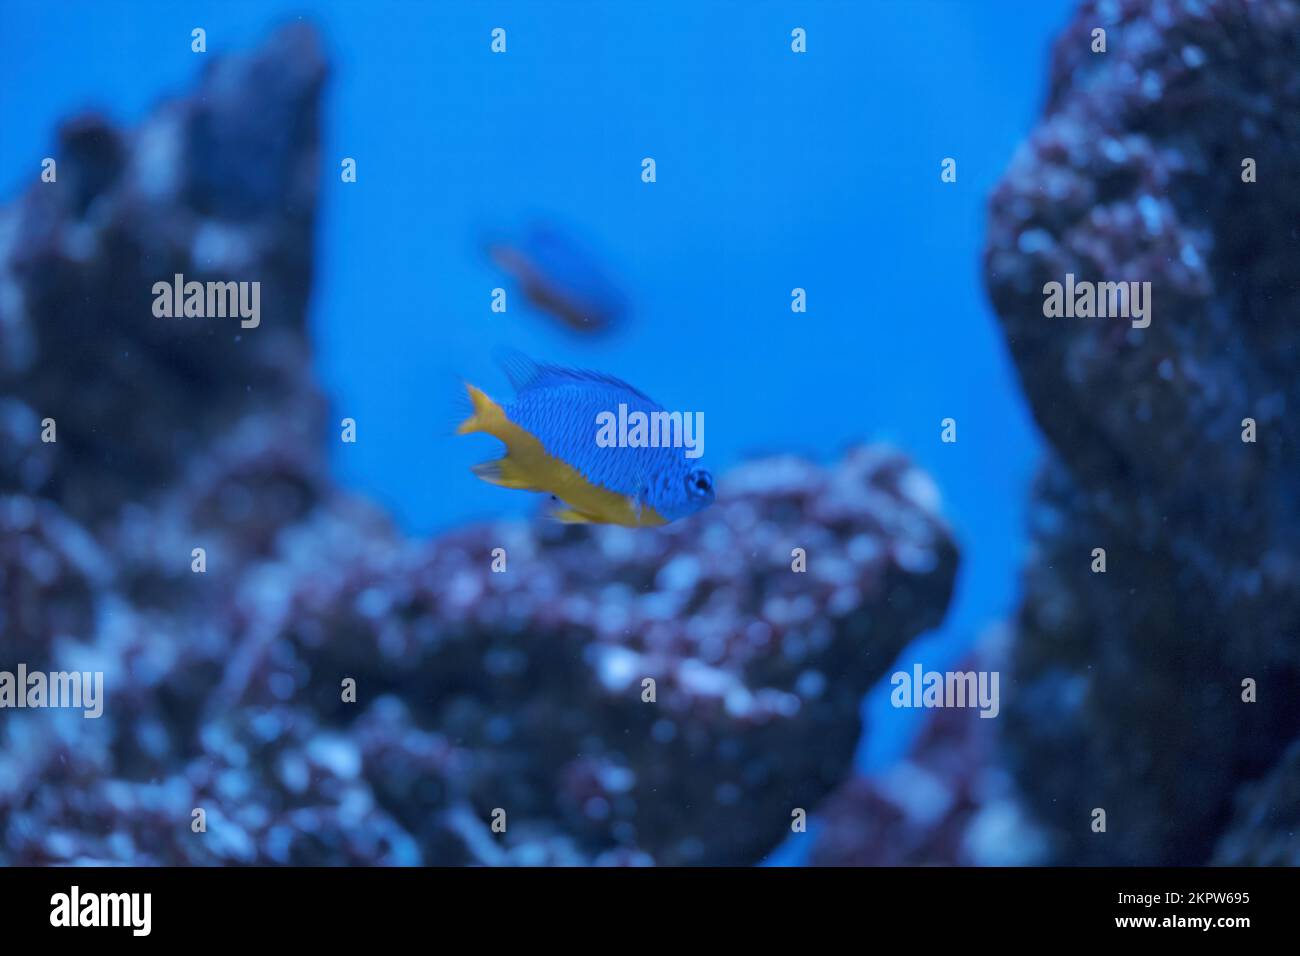 Azure Damselfish, Chrysiptera hemicyanea, swimming on a reef tank with blurred background. download image Stock Photo